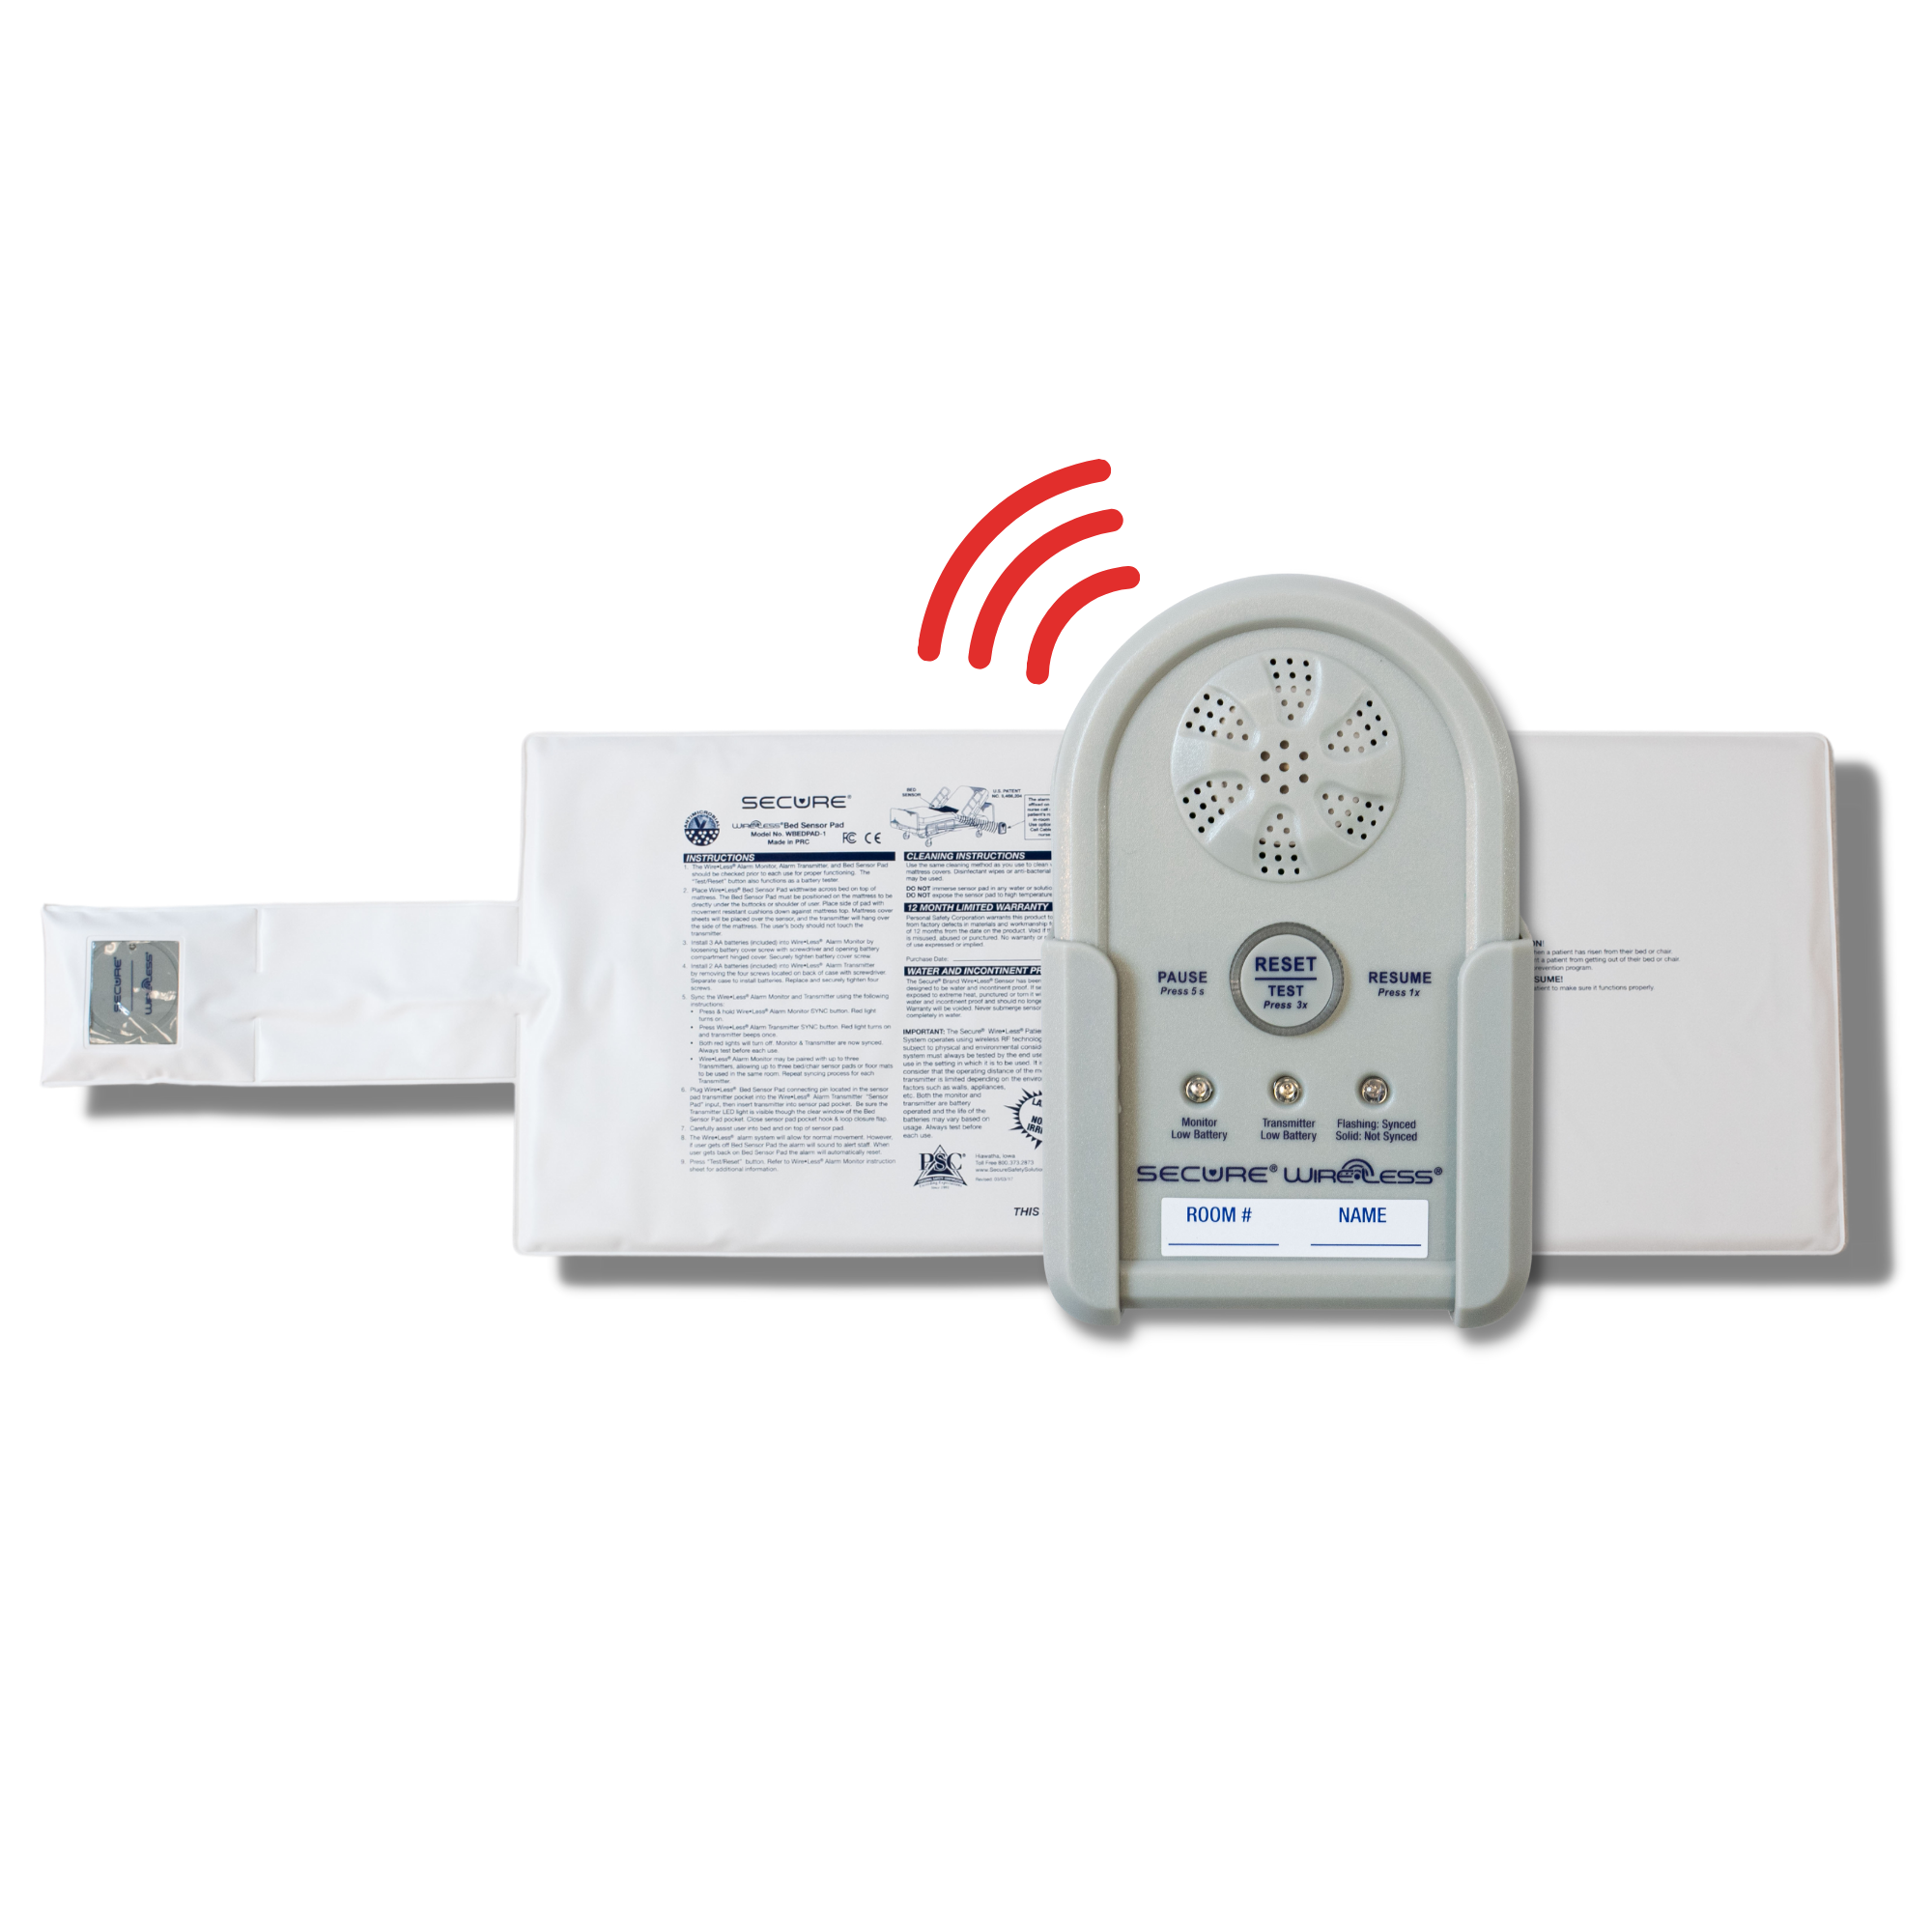 Wireless Bed Alarm for Elderly Fall Prevention